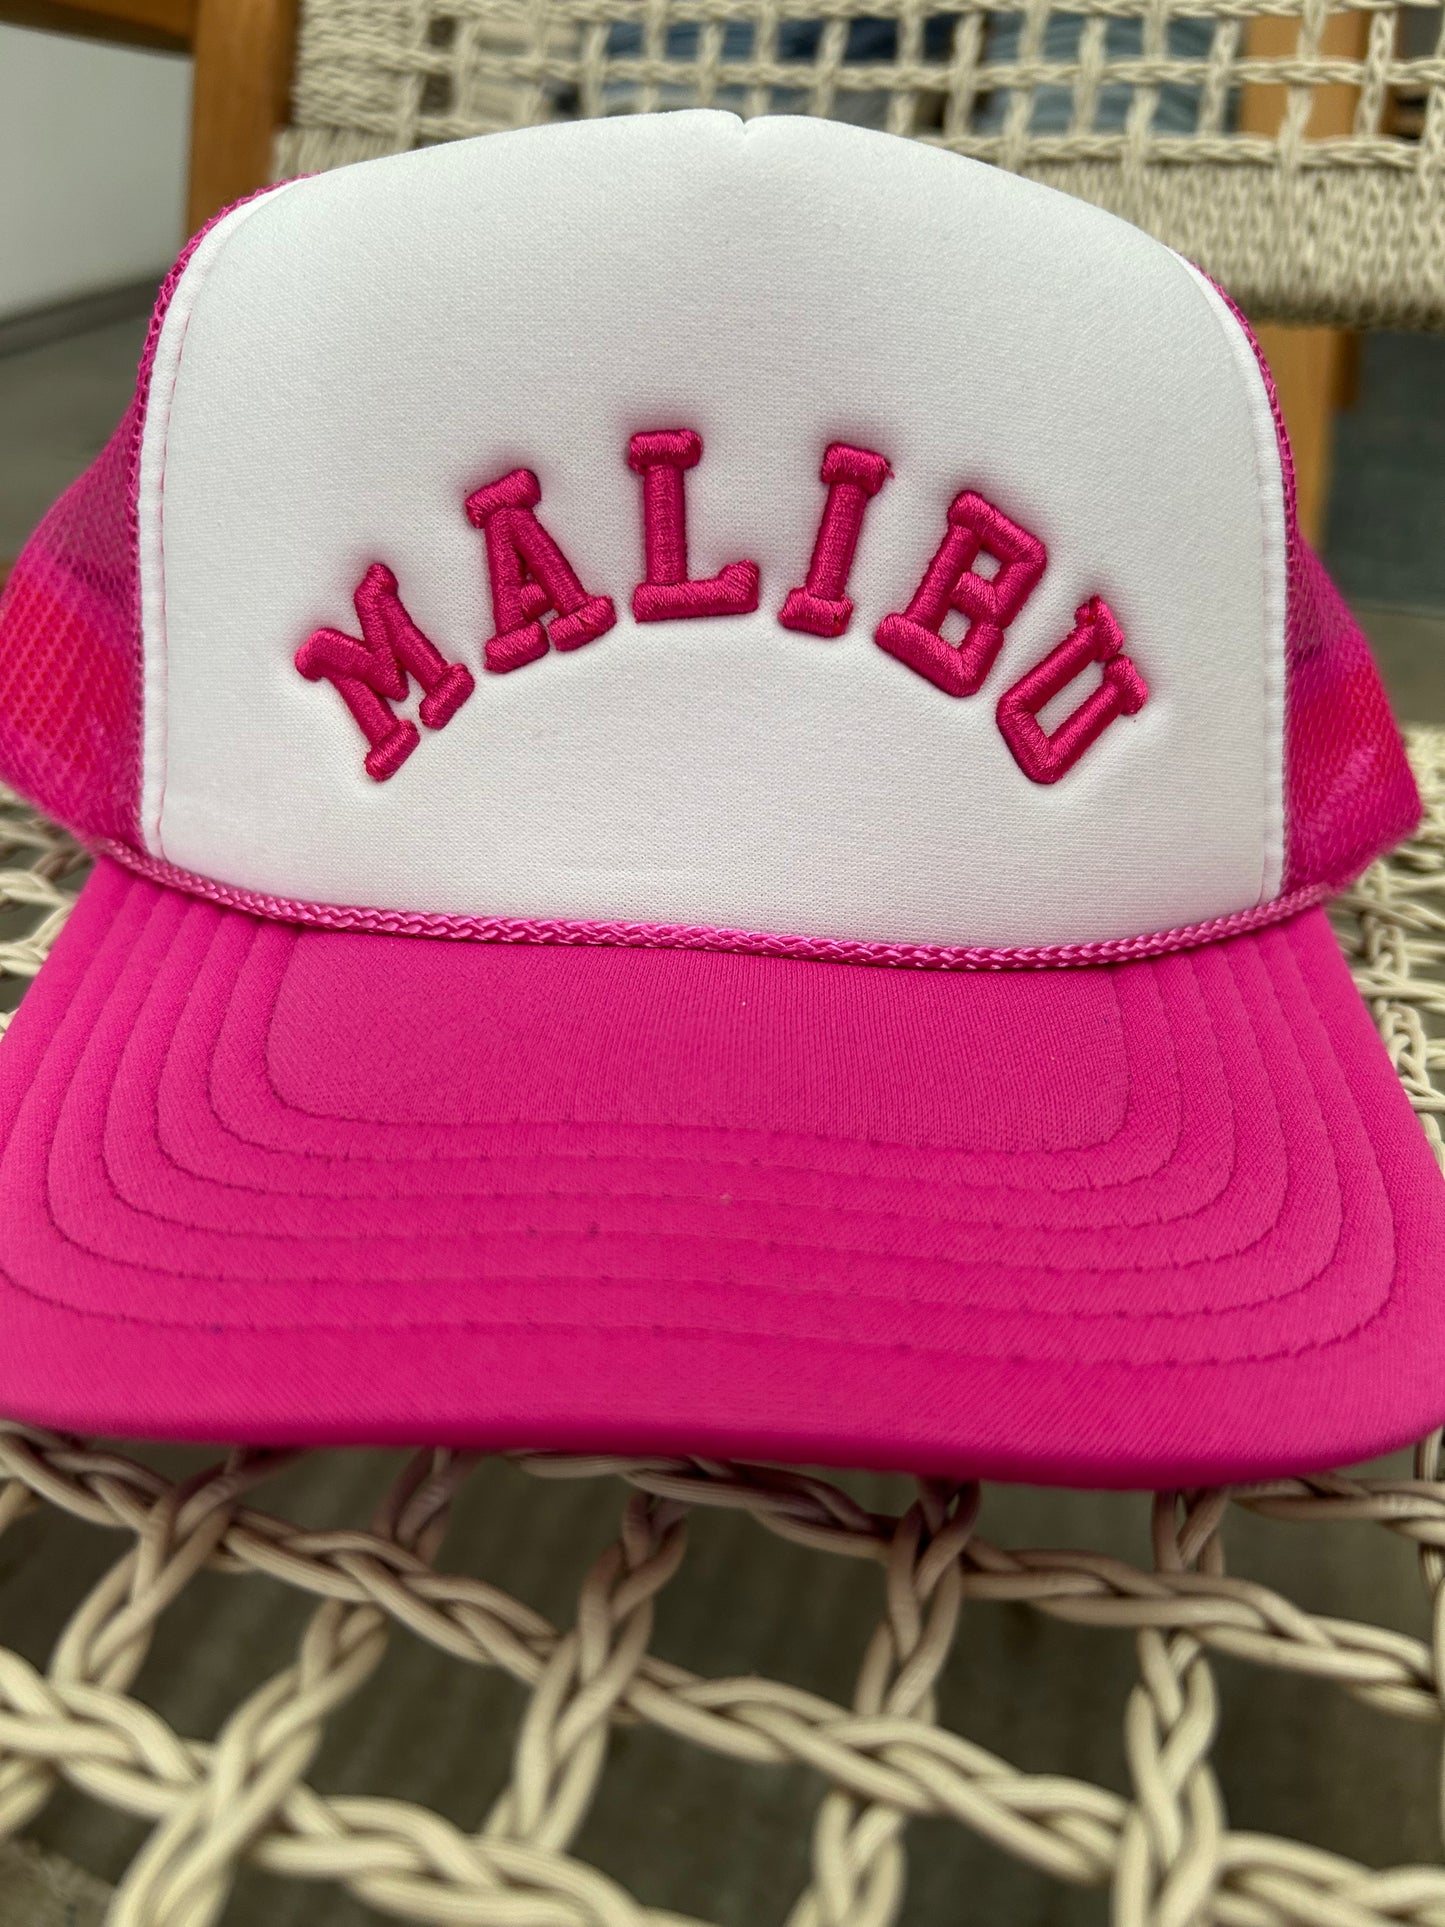 Malibu- Plumeria Pink